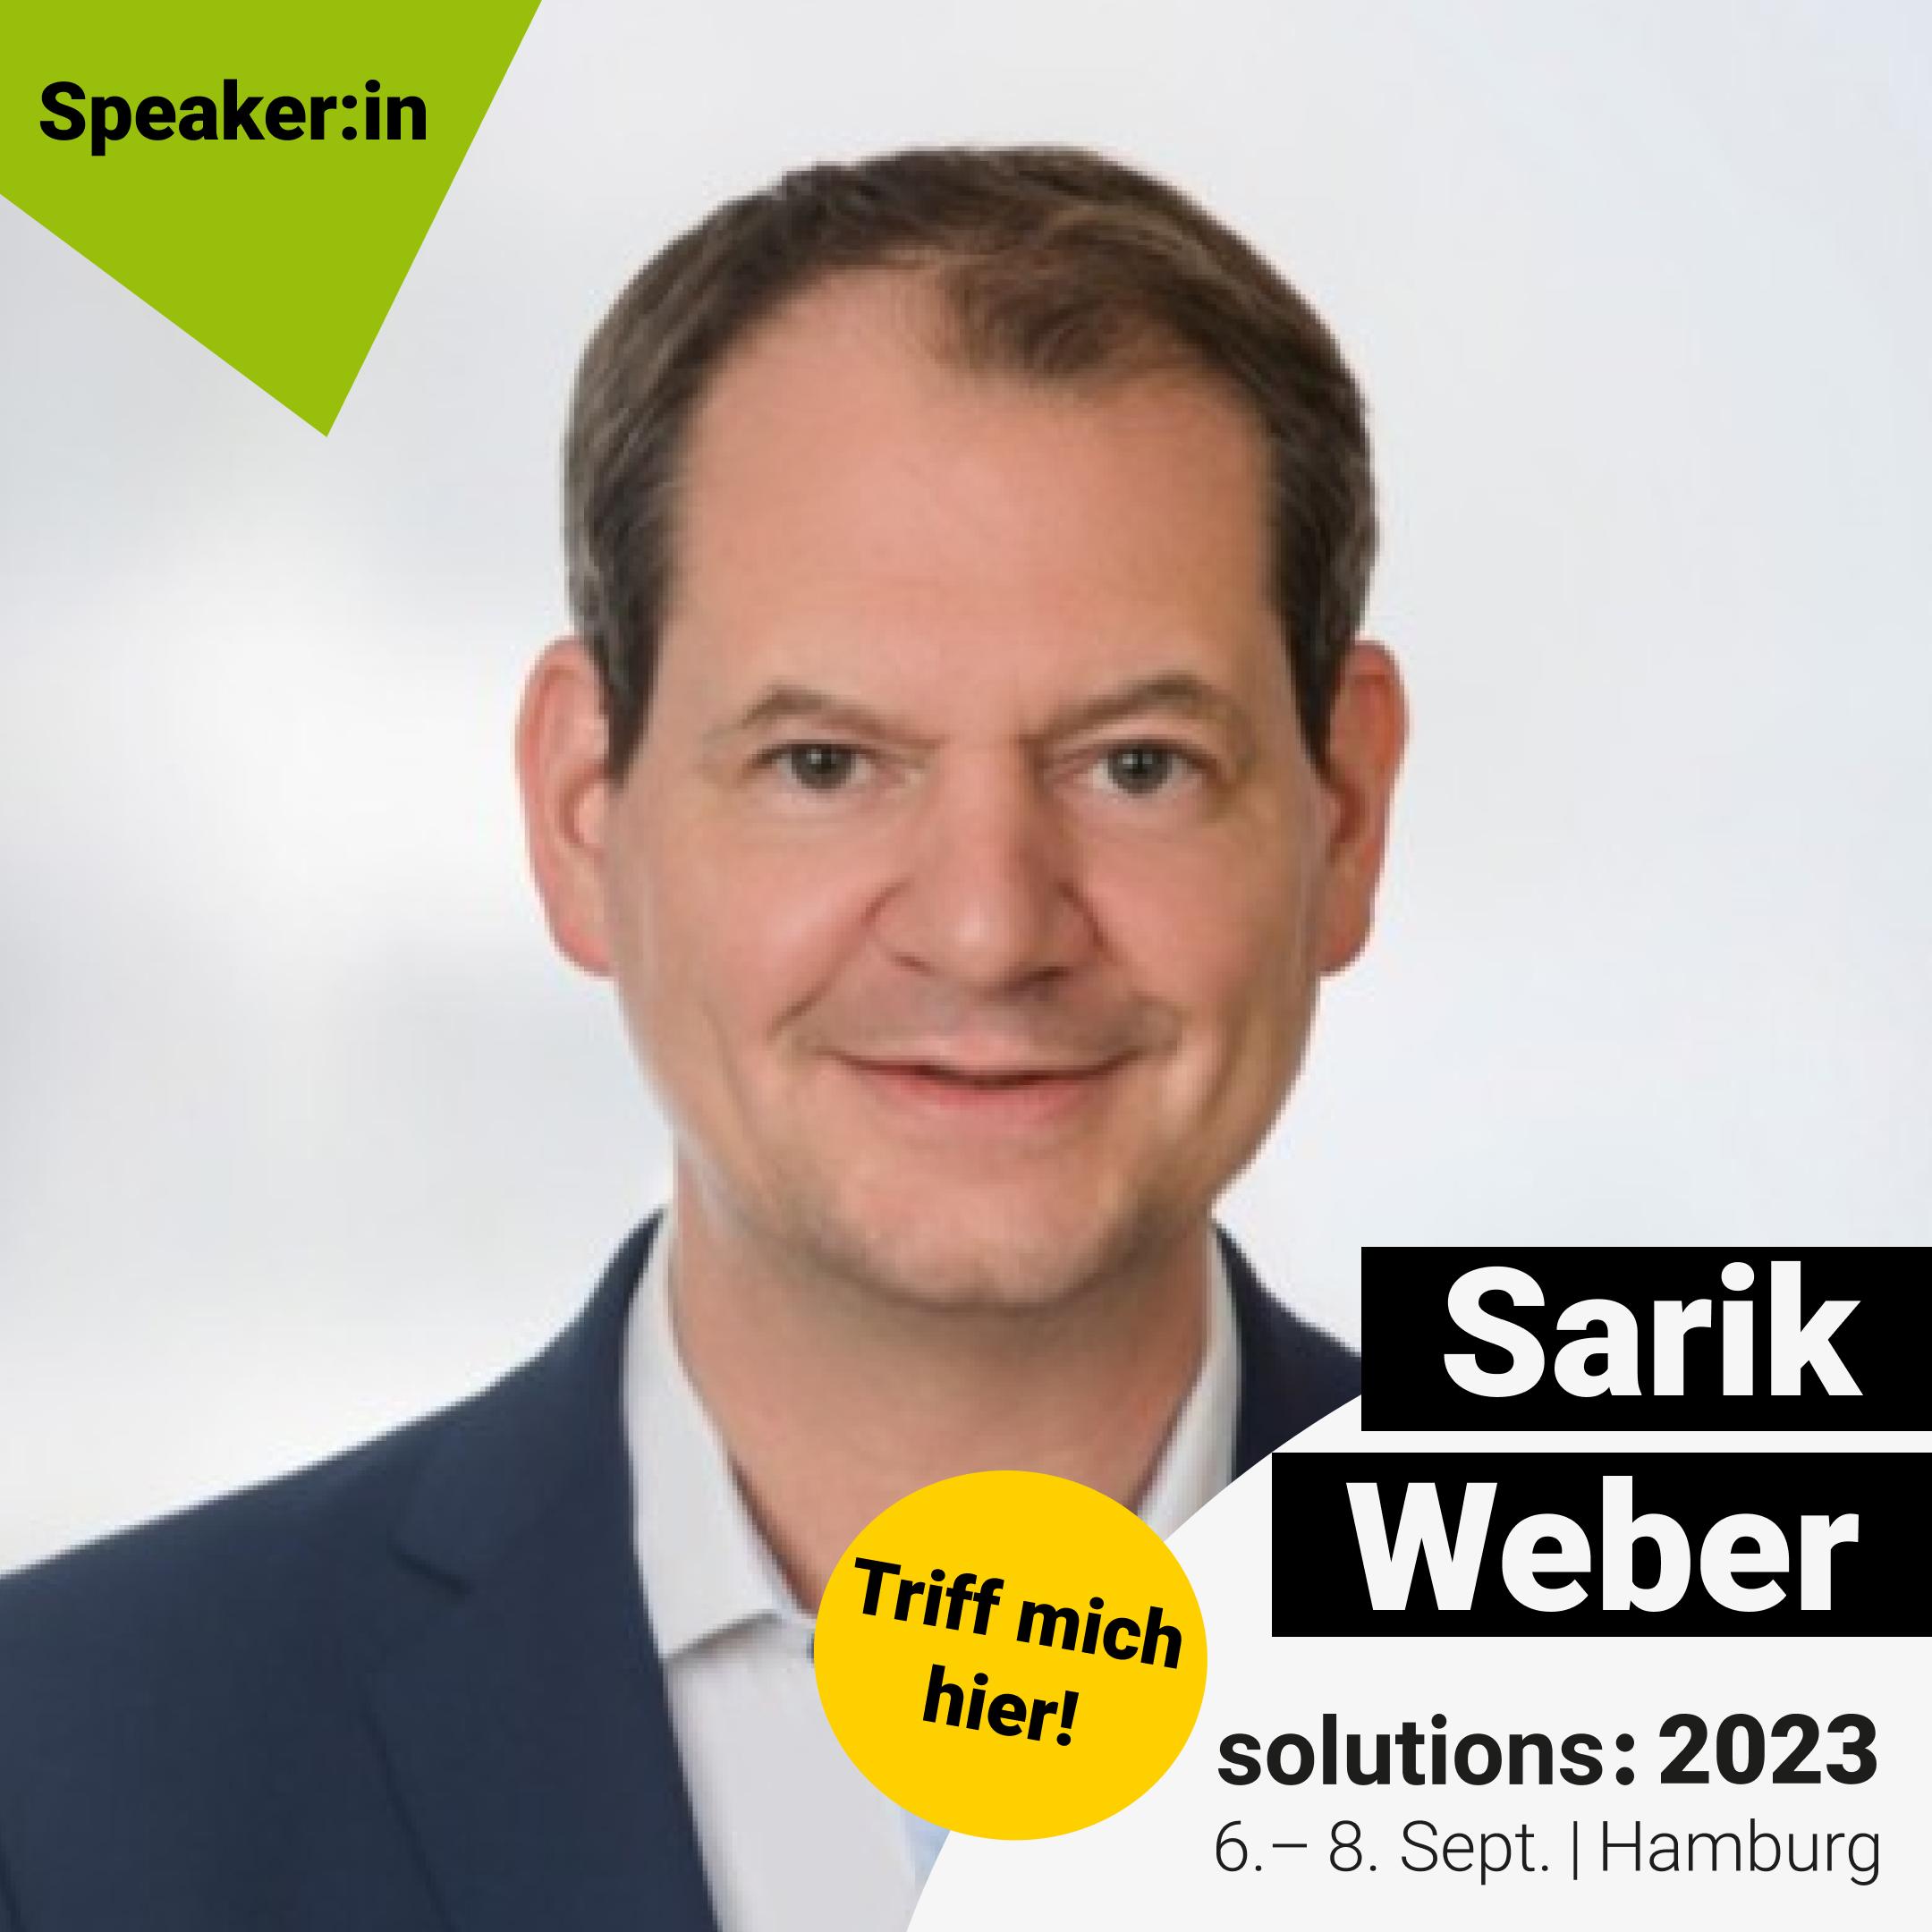 Image of Sarik Weber - solutions: 2023